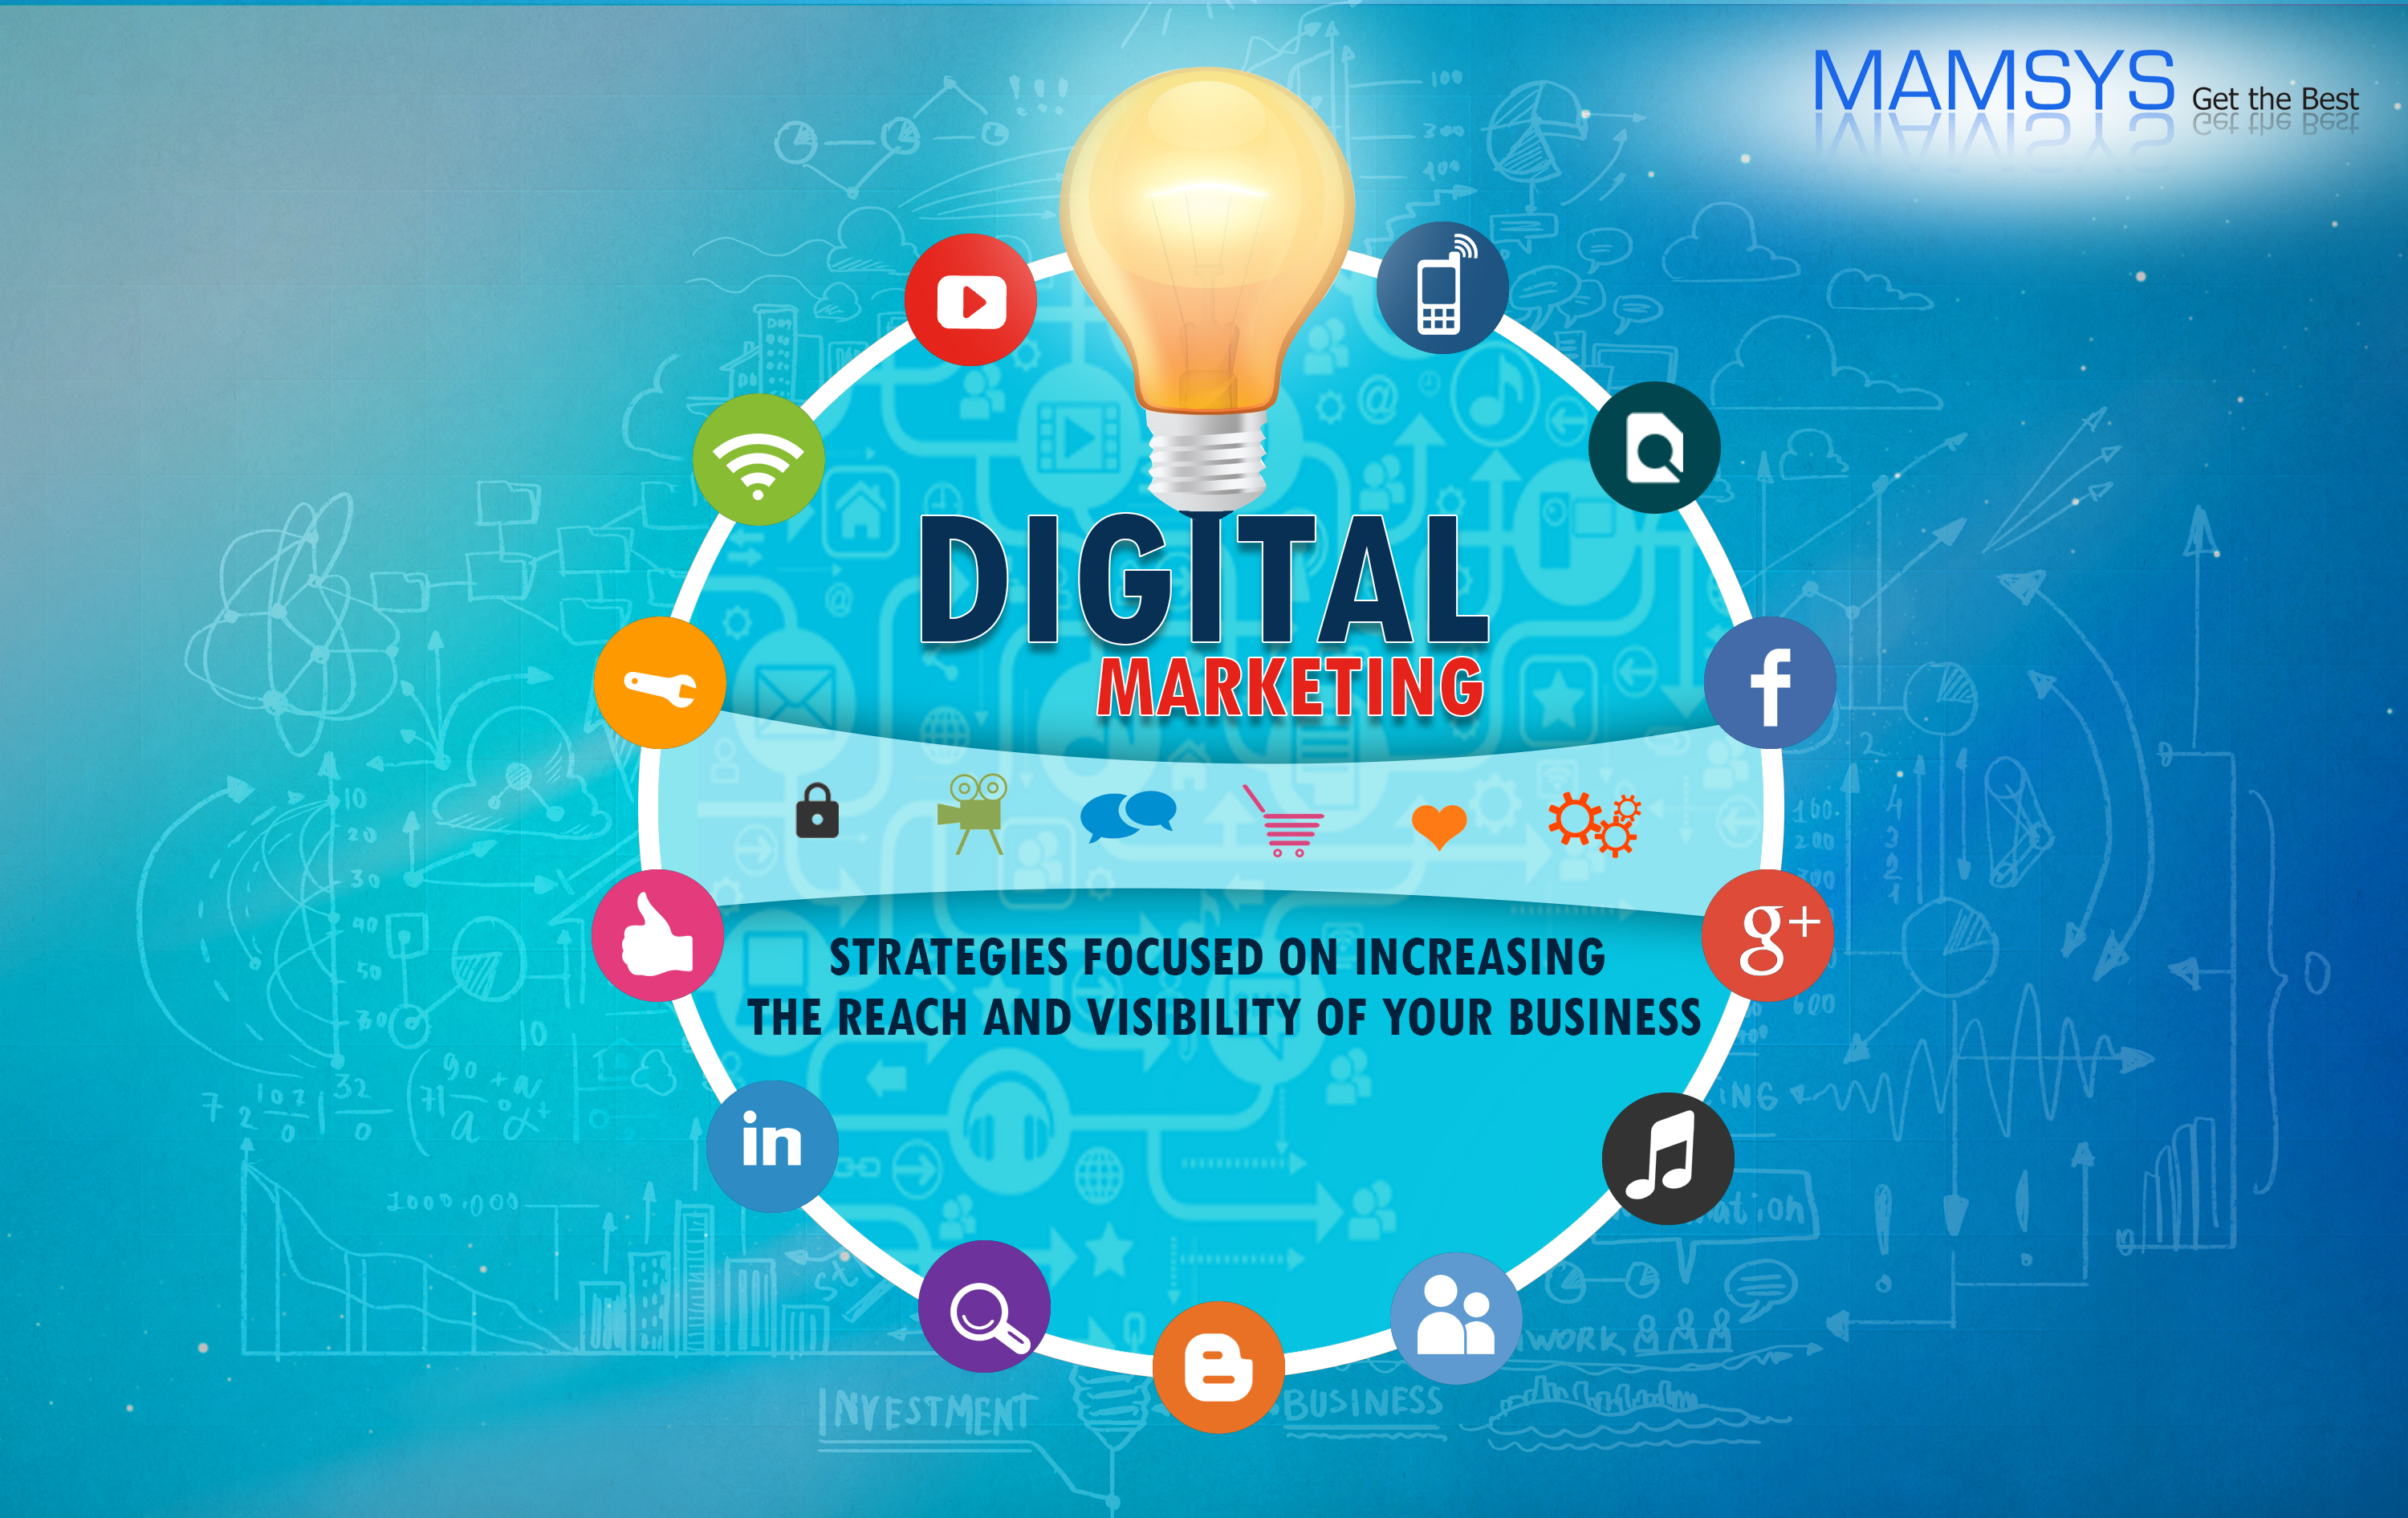 digital-marketing-creative-08-01-2015.jpg